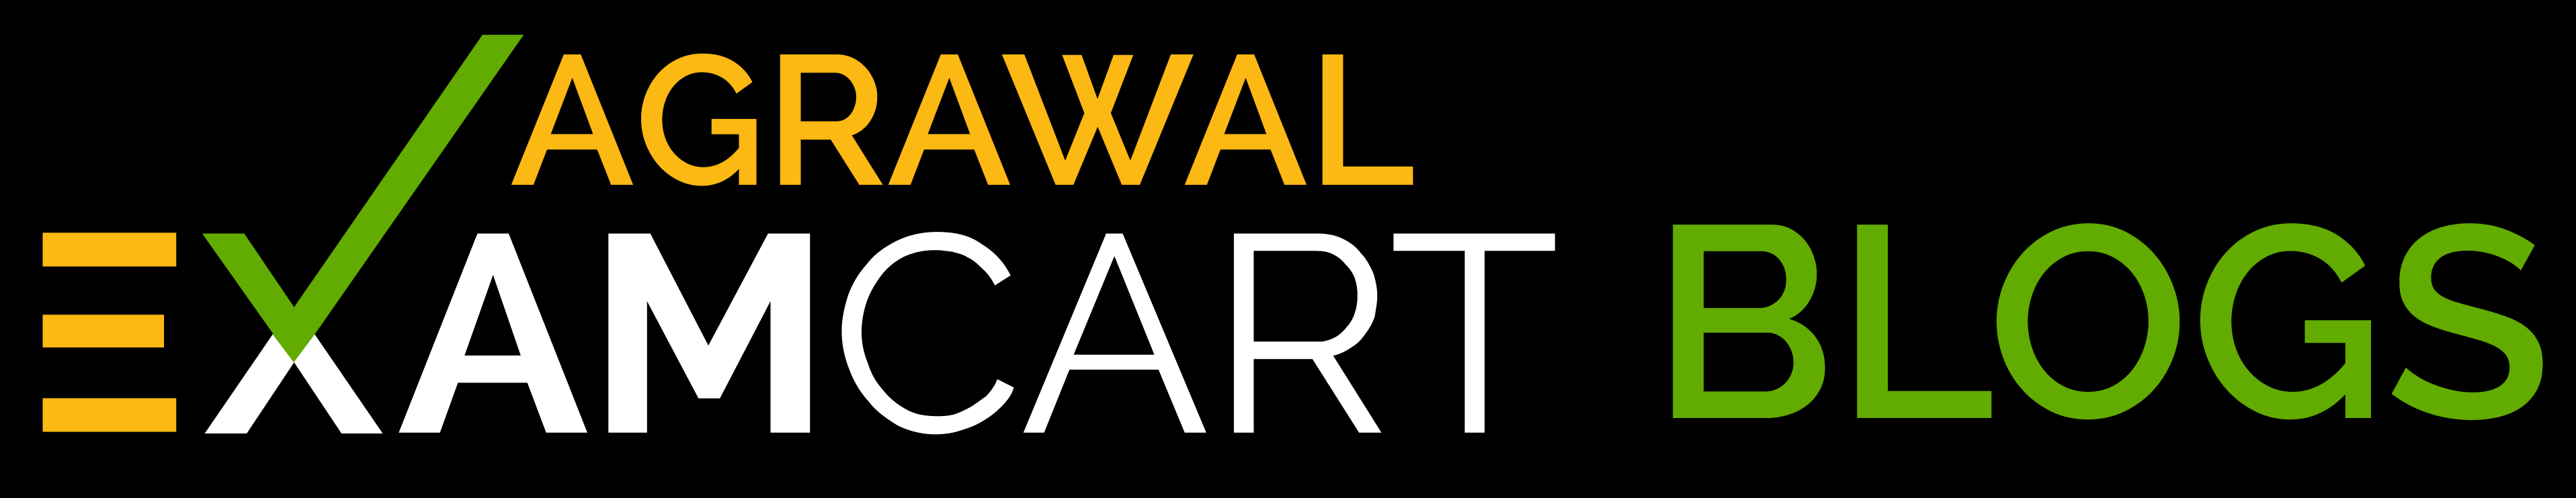 Agrawal-Examcart-Blogs